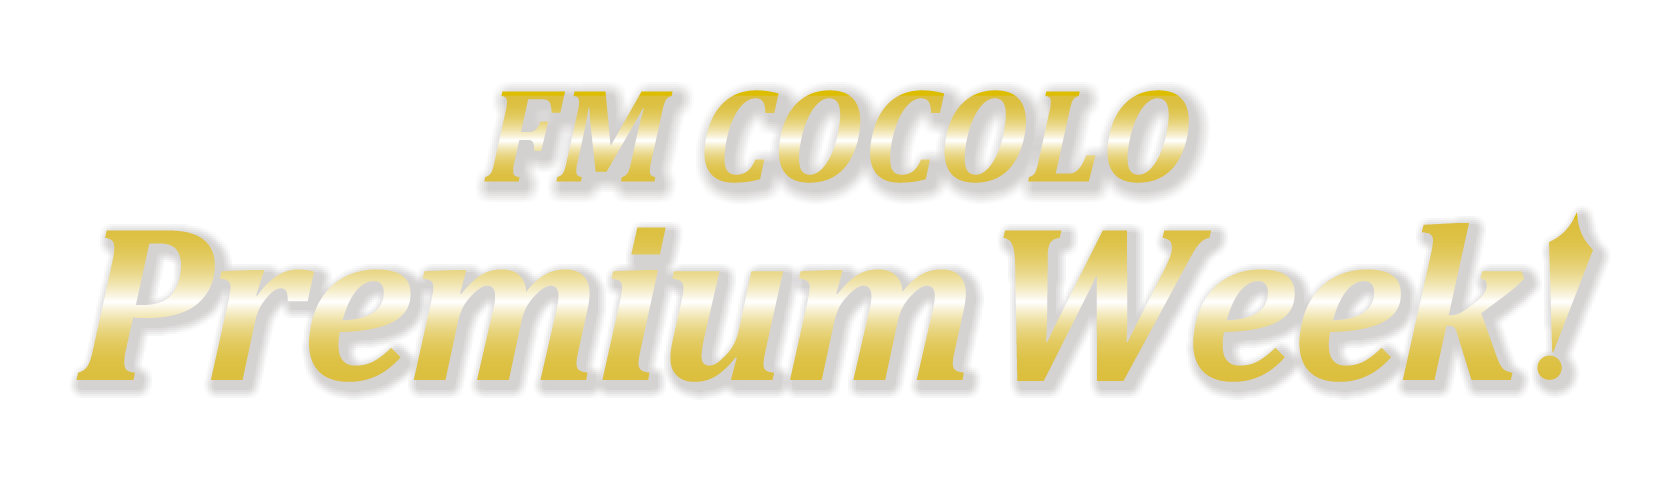 FM COCOLO Premium Week!